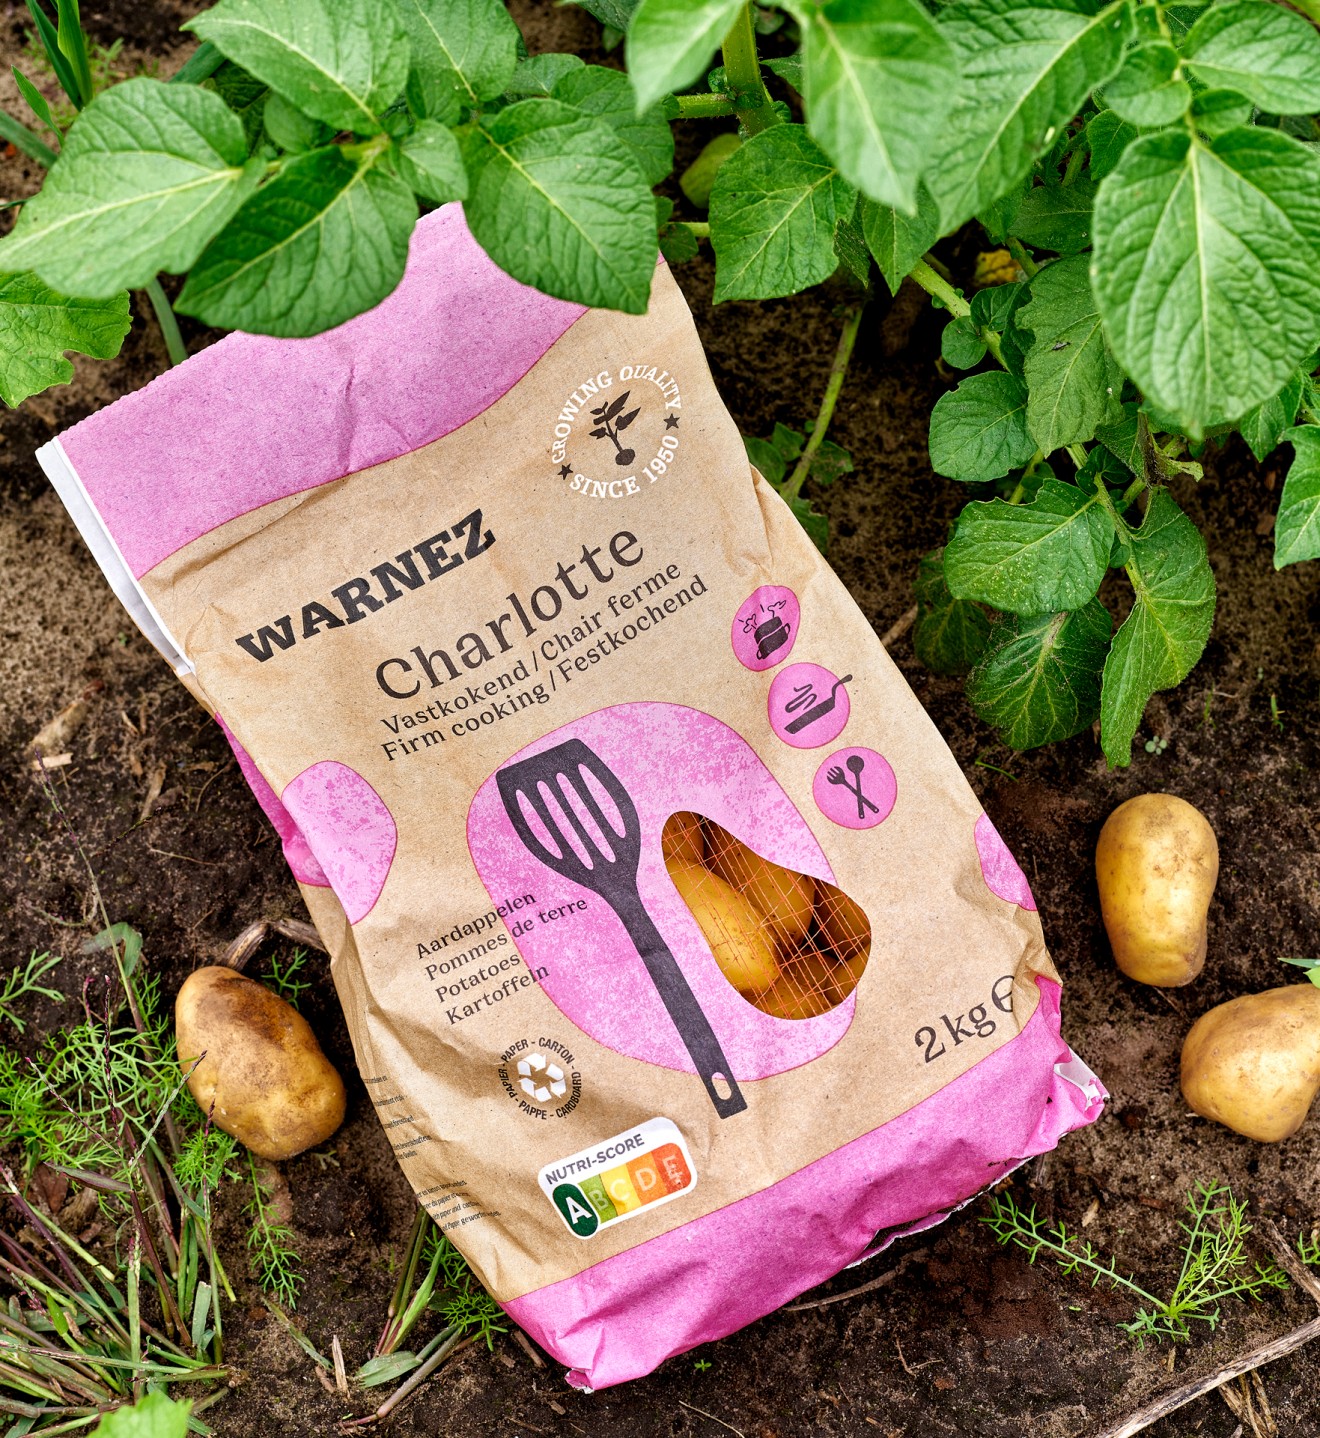 Quatre Mains package design - Packaging design for Warnez Potatoes